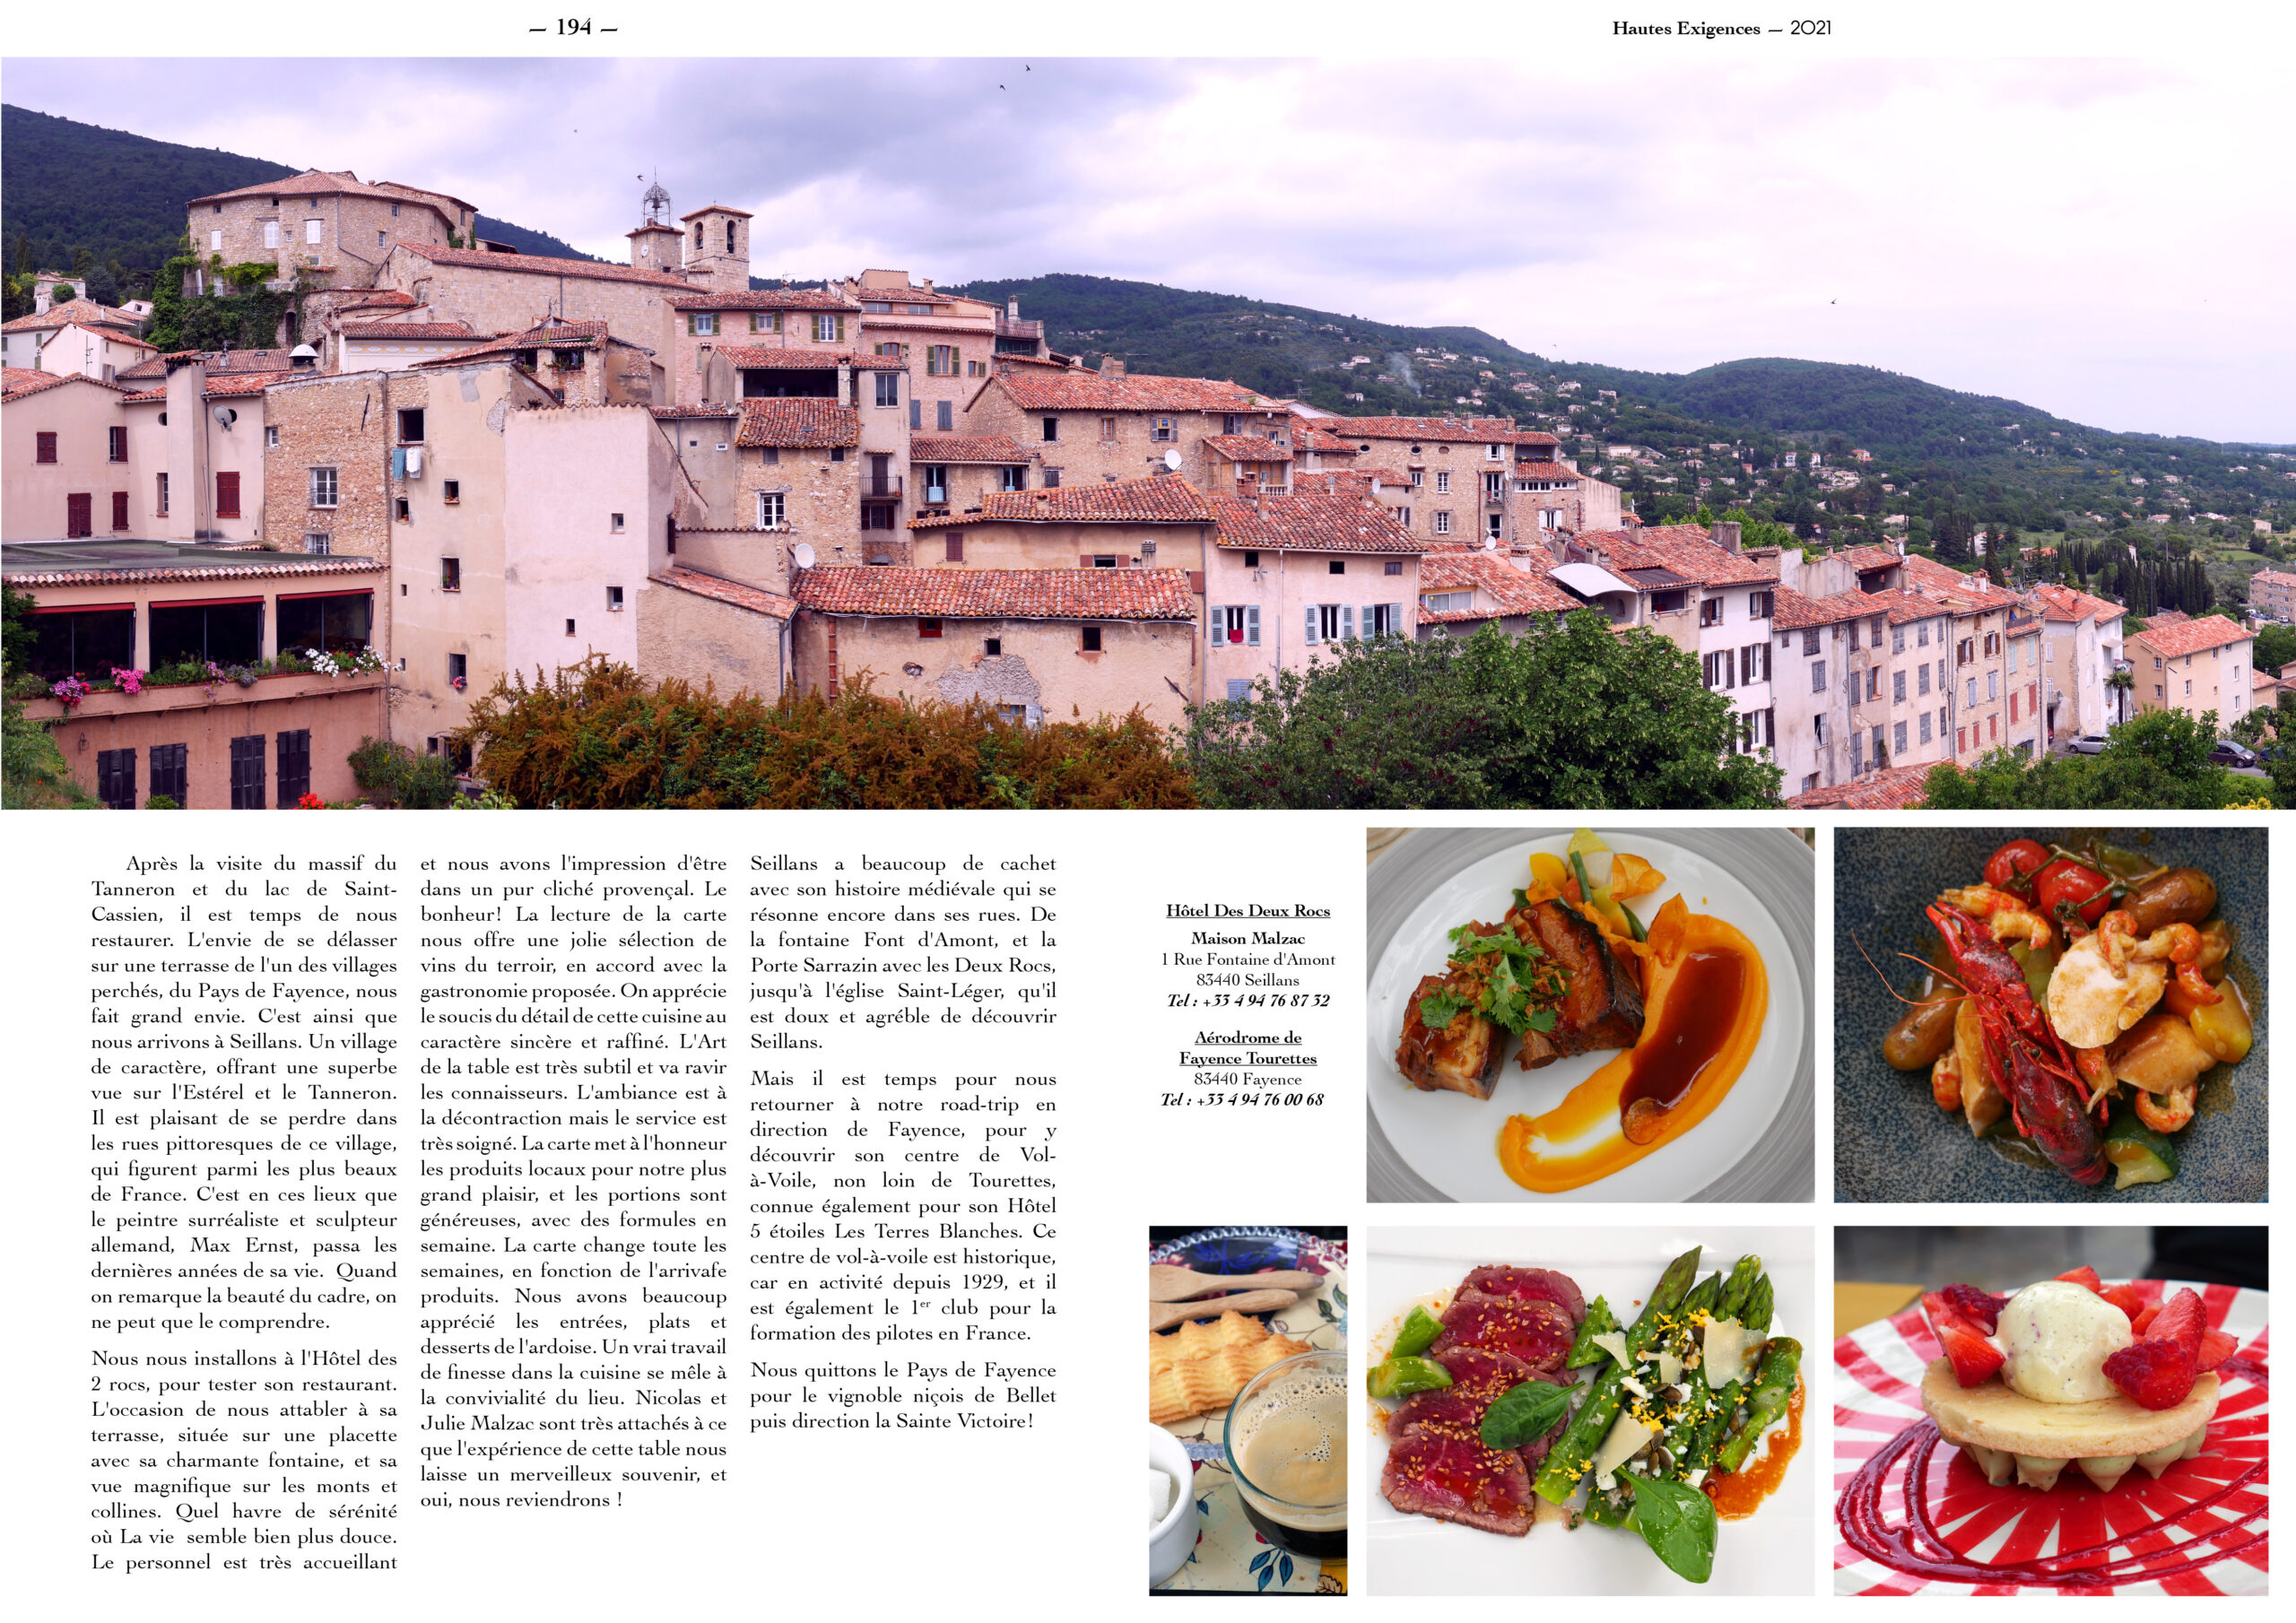 Hautes Exigences Magazine Hors Serie 2021 page 192-193